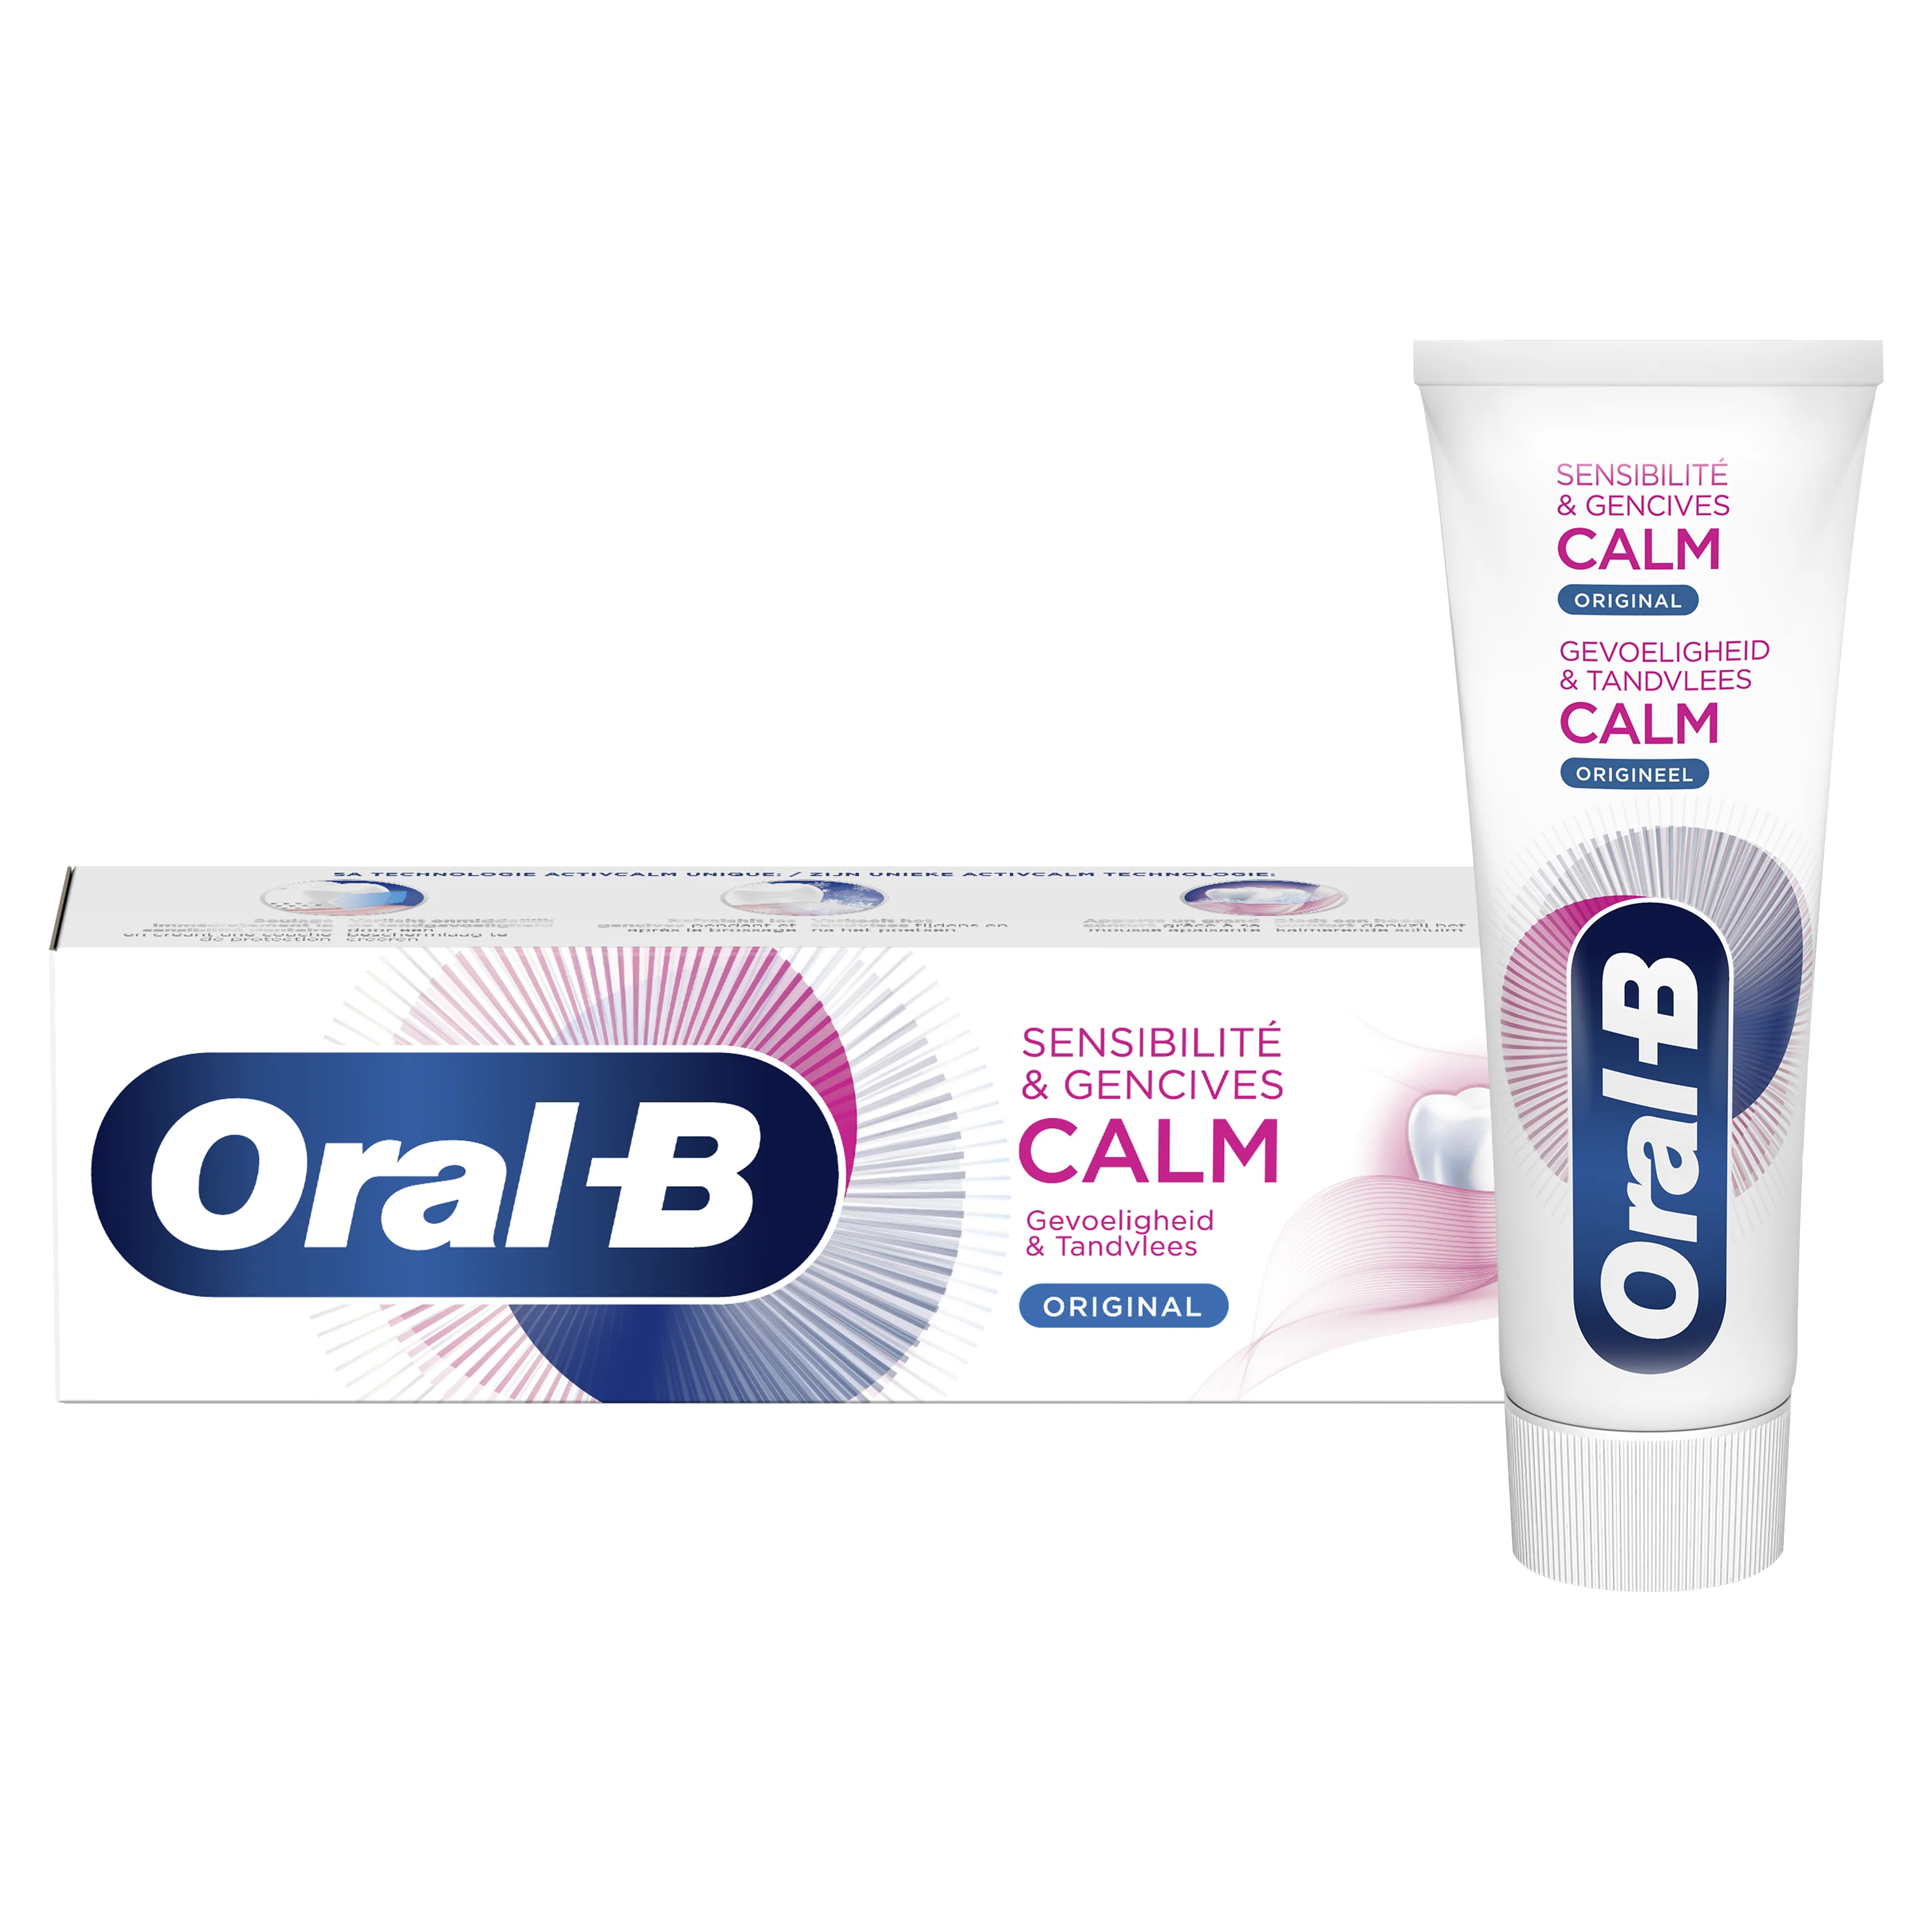 Oral-B Sensibilité & Gencives Calm Original Dentifrice 